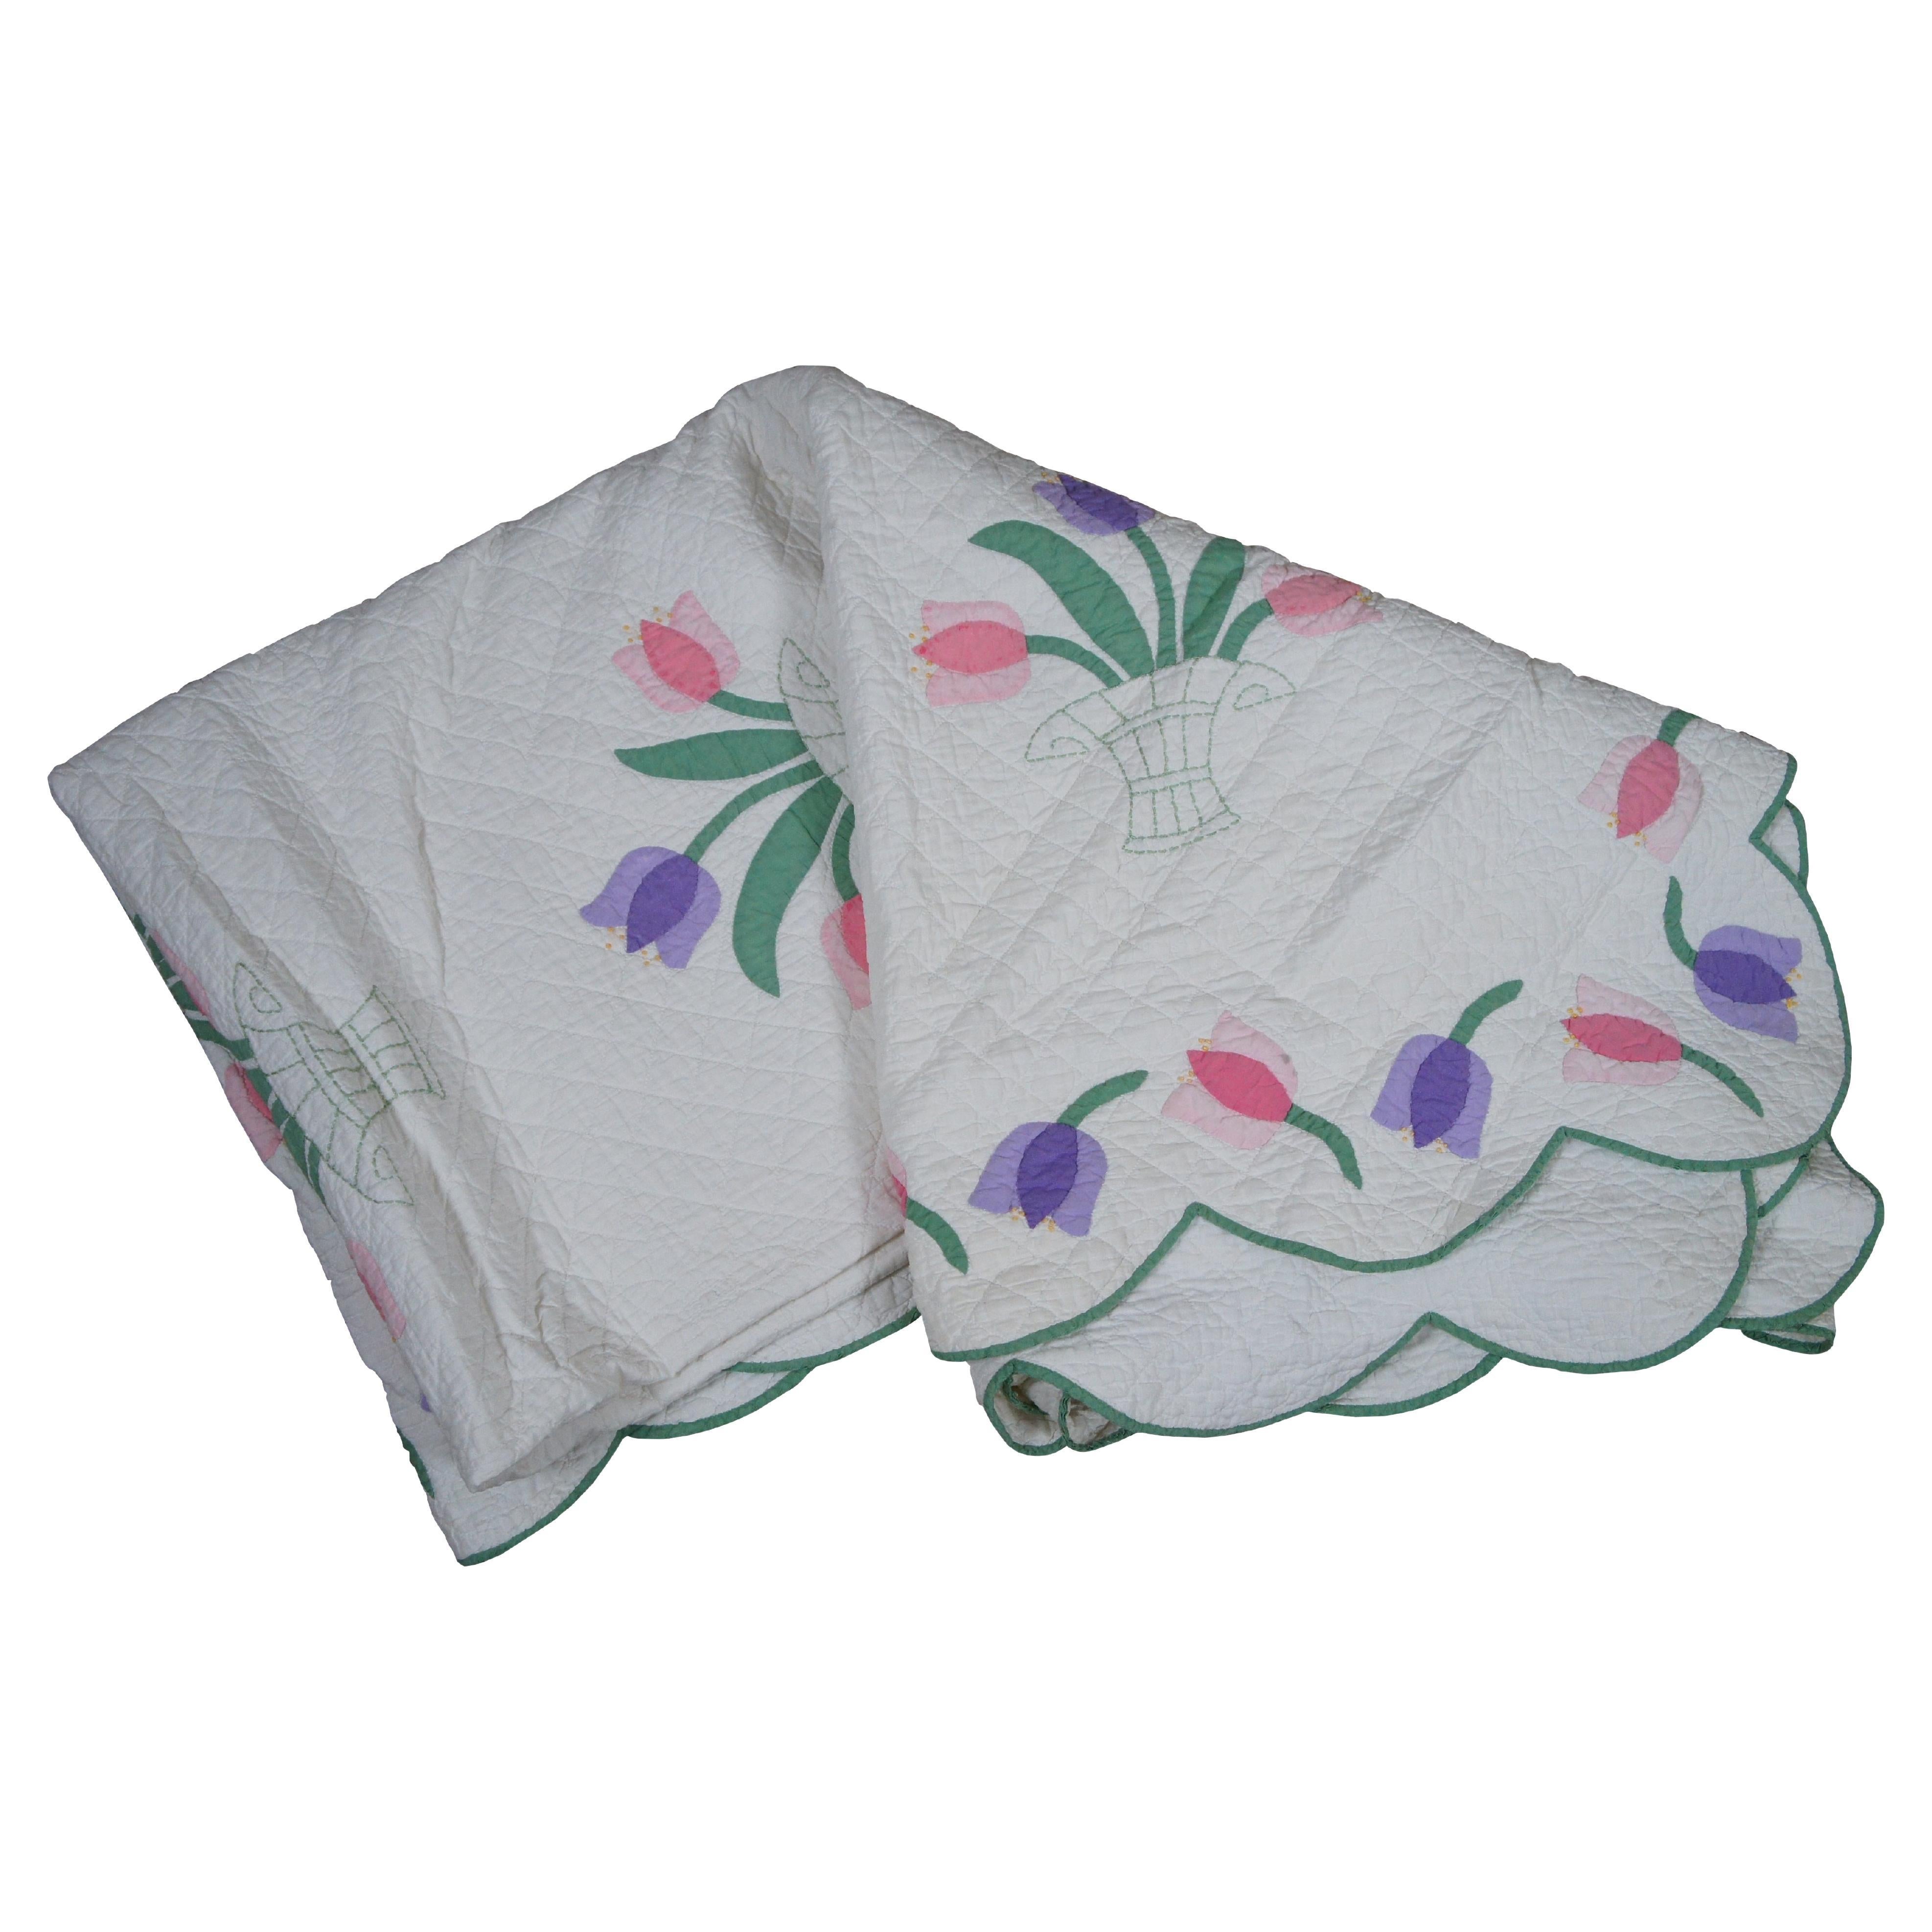 Antique Folk Art Stitched Tulip Flower Baskets Applique Quilt Blanket For Sale